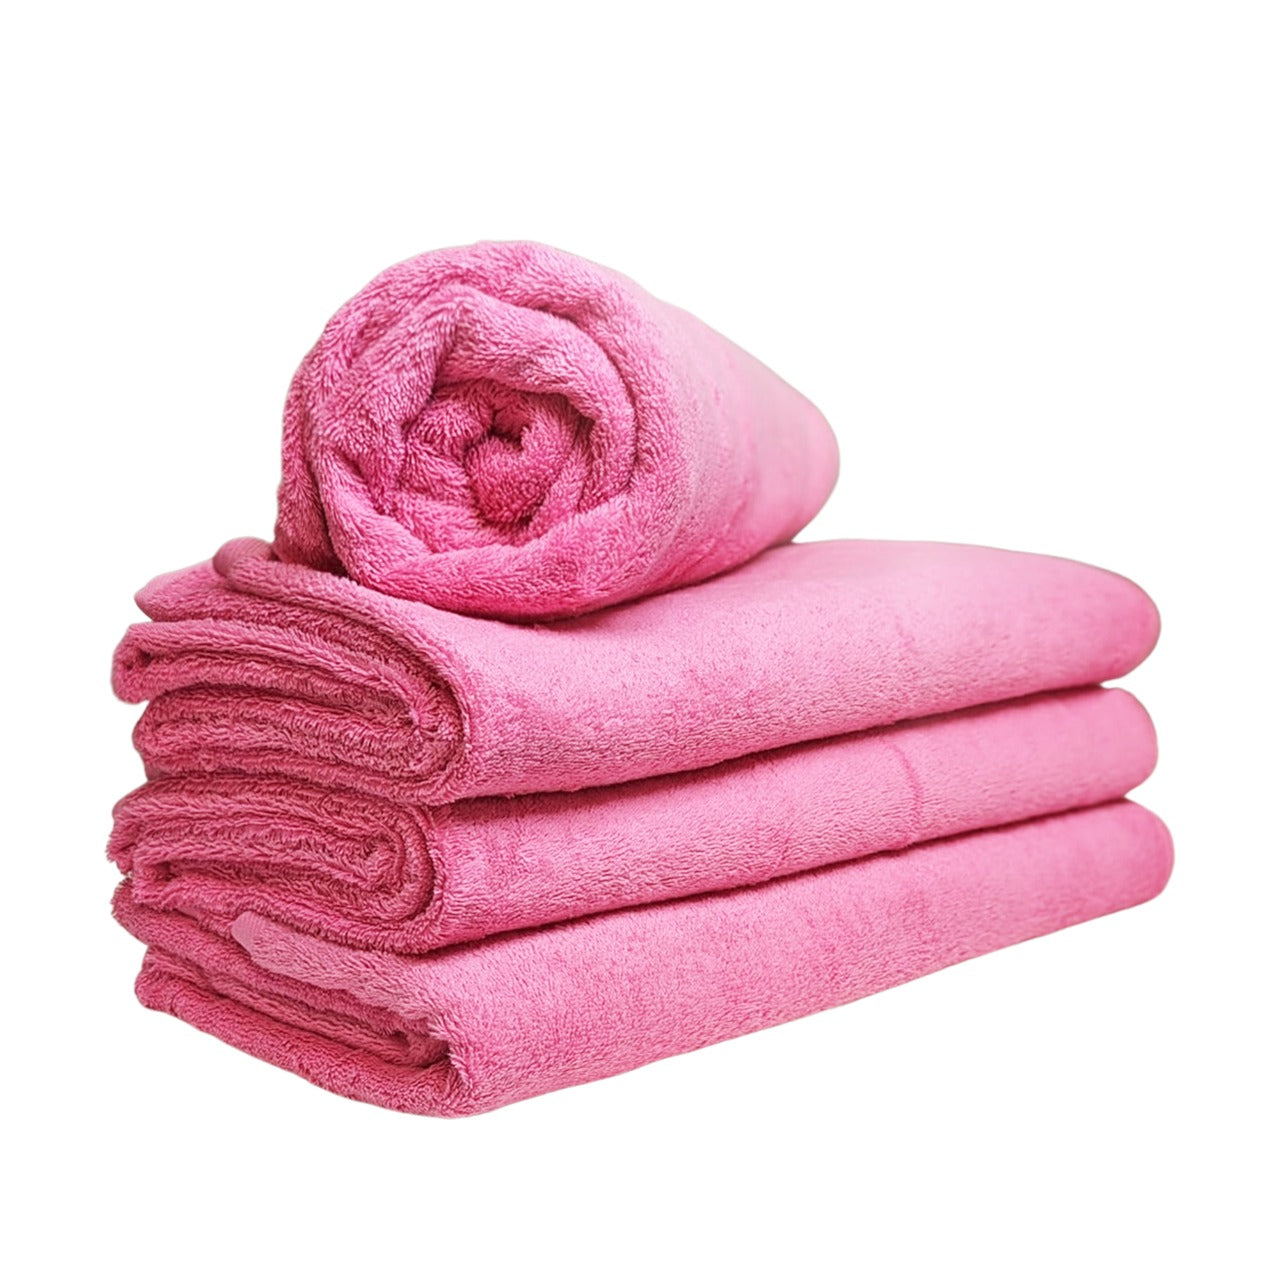 American Comfort Luxury Pink Miami Vice Cabana Towels - 31.5" x 67" (22 lbs / dozen) - American Comfort